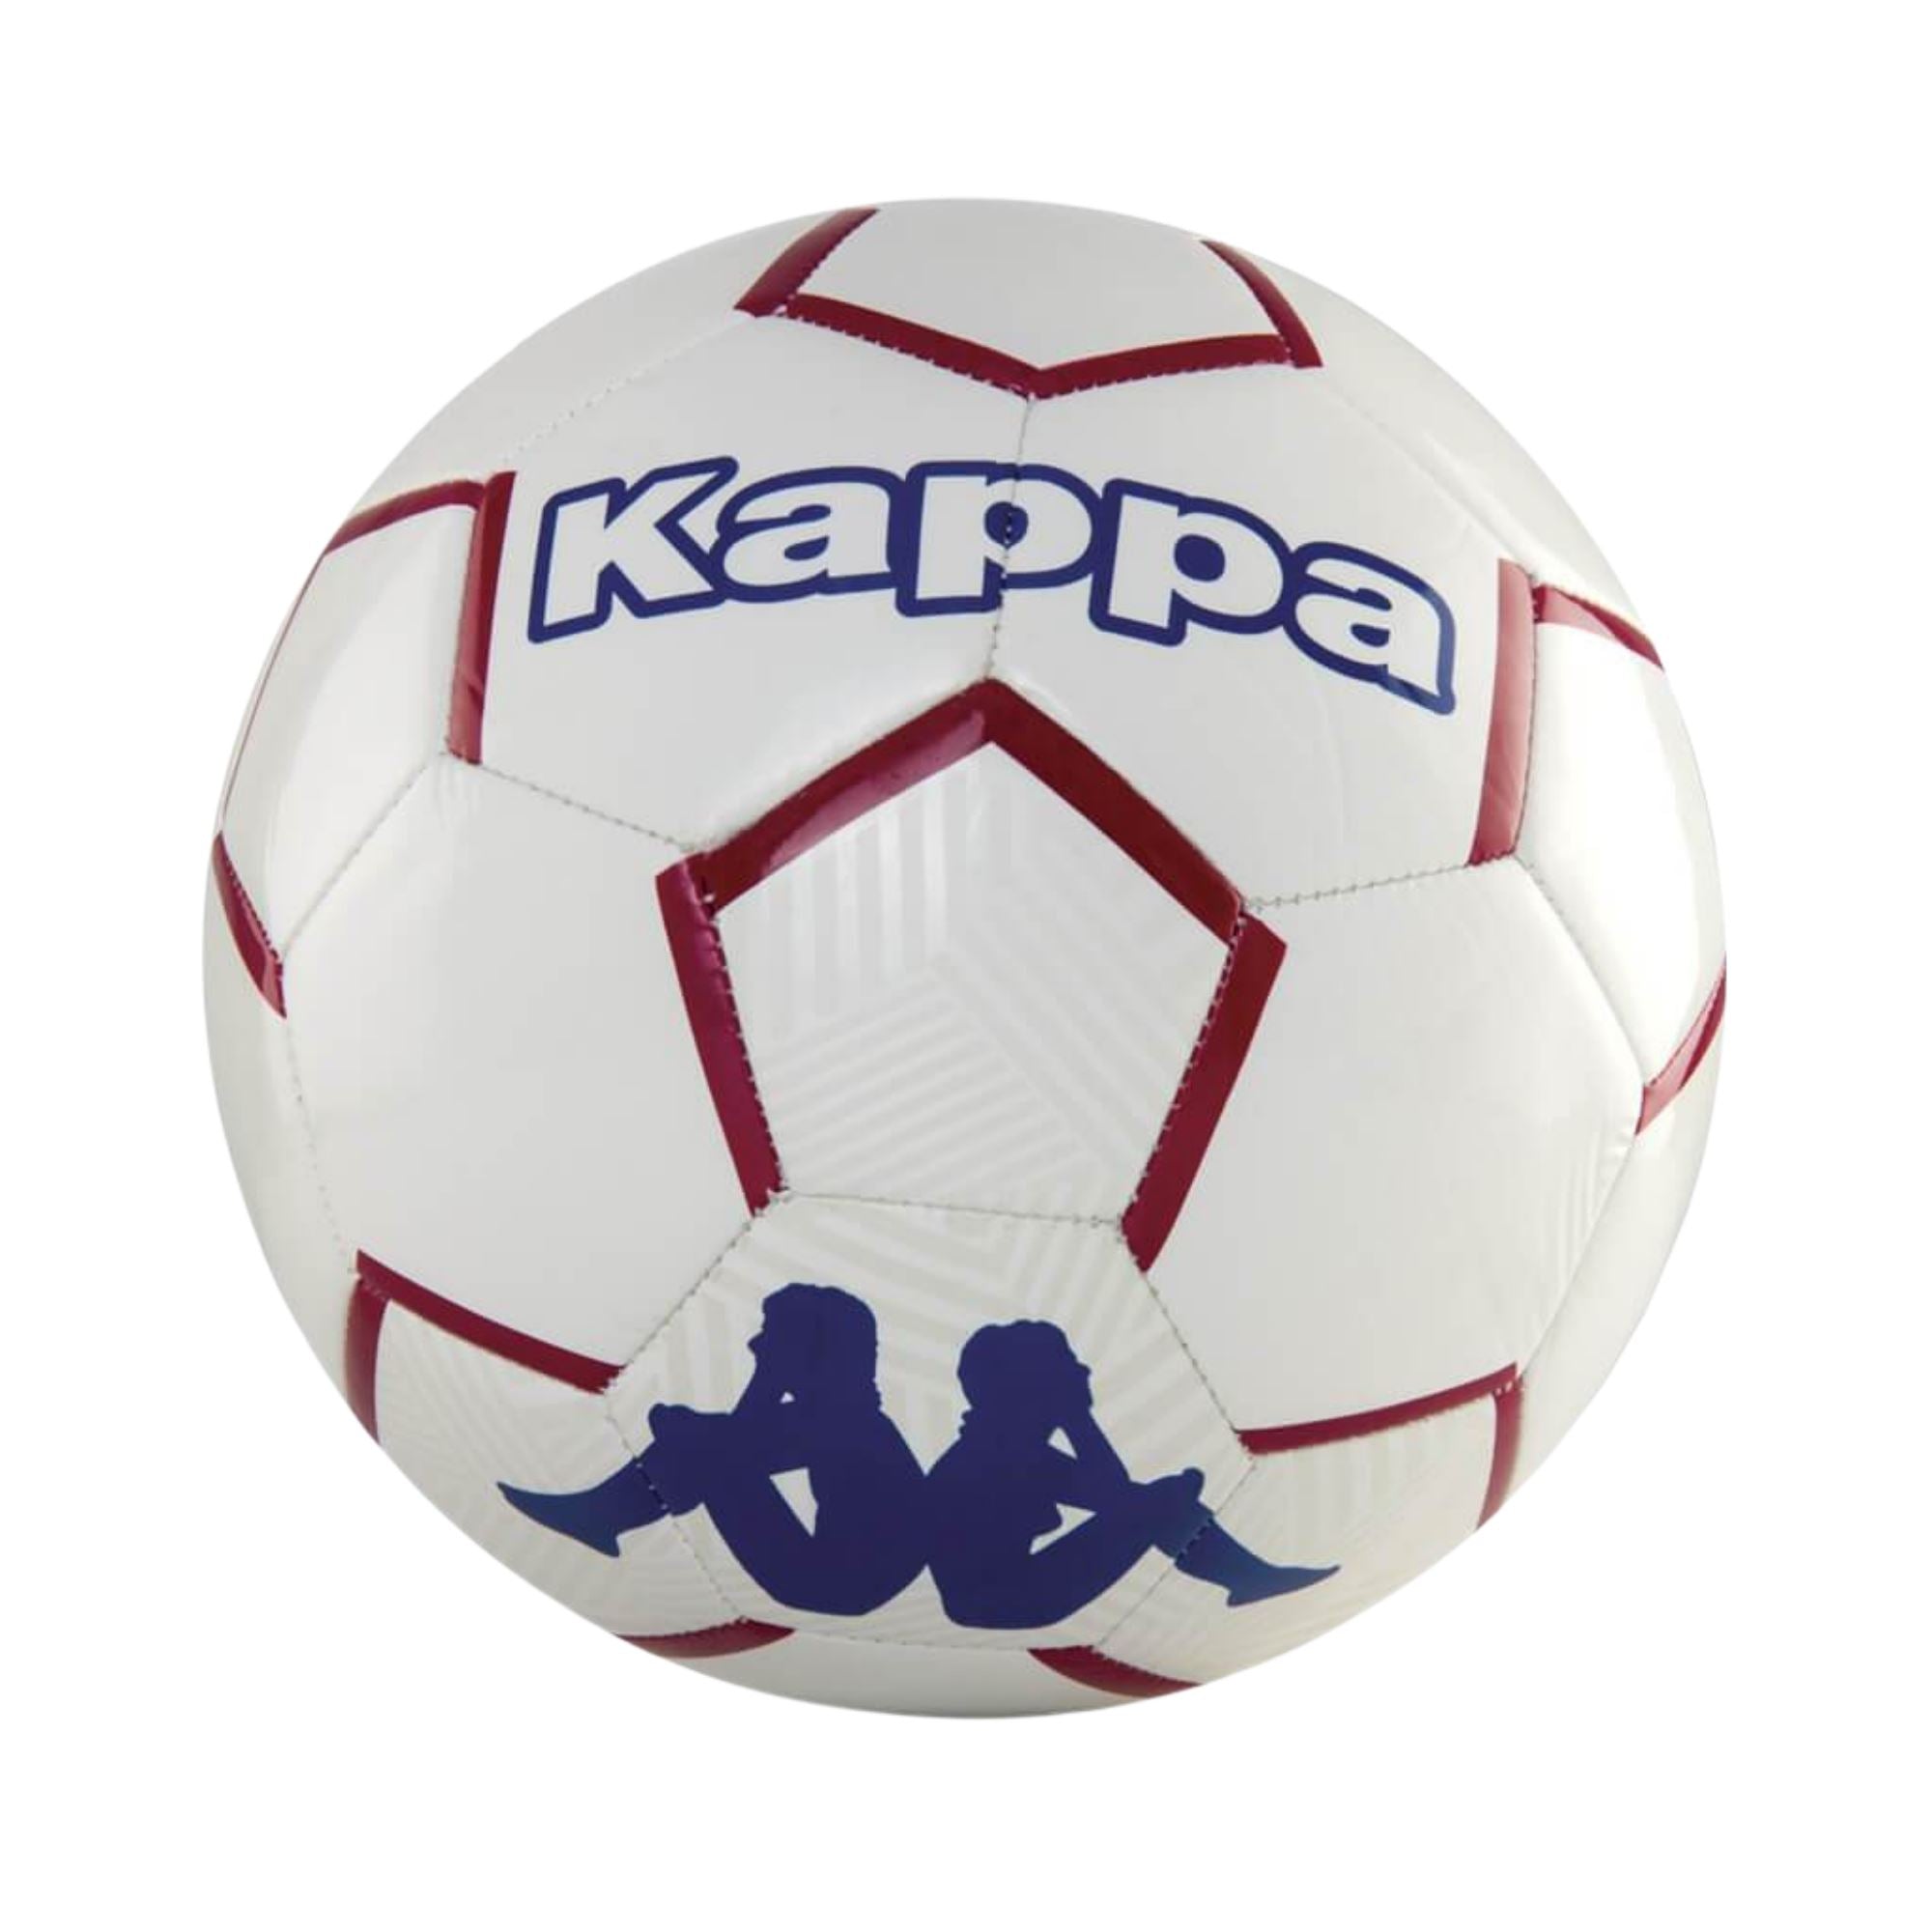 Kappa Soccer Ball Size 5 - ITASPORT